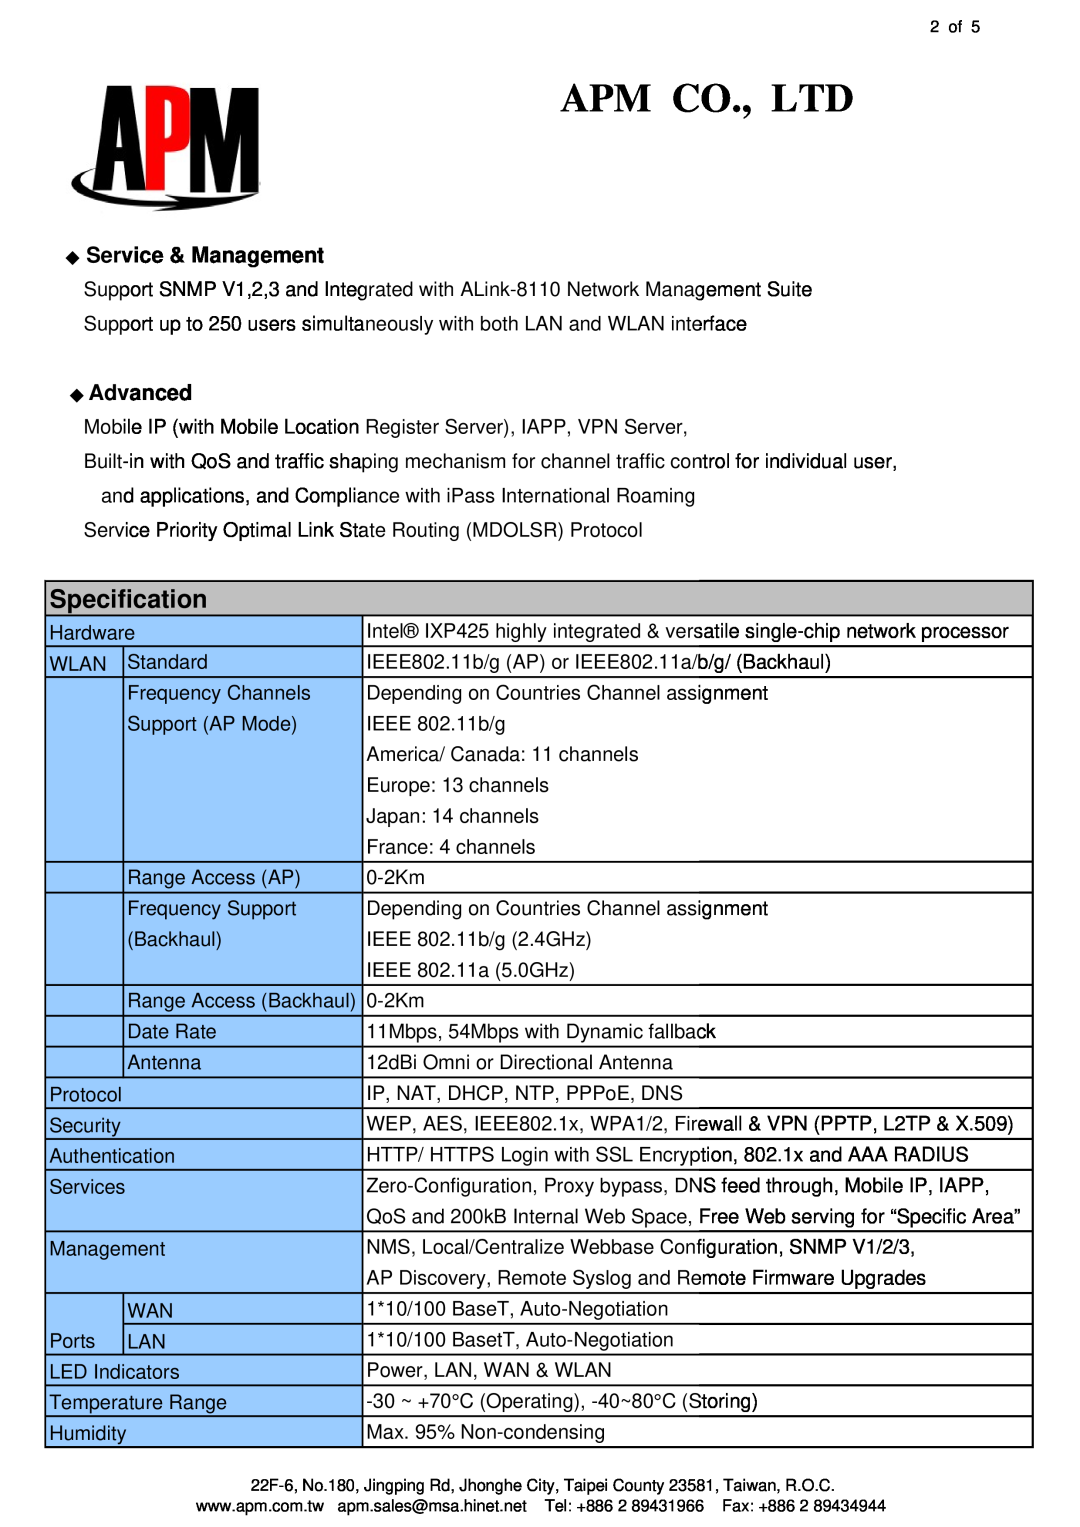 APM PRO-8110, ALINE-8110 manual Specification, Service & Management, Advanced 